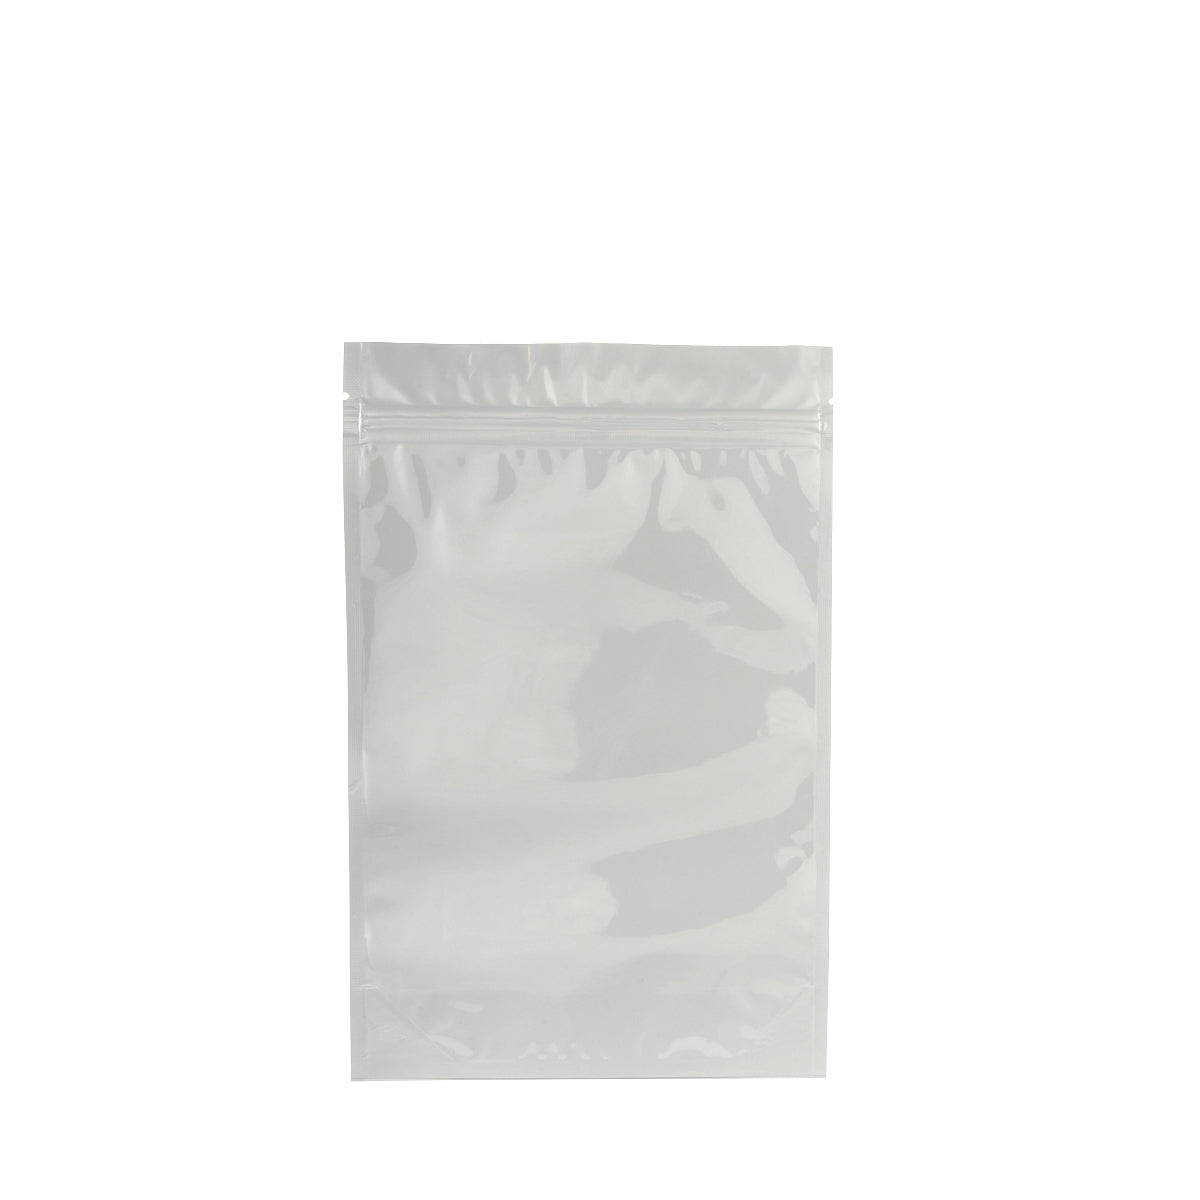 Tamper Evident | Glossy White Mylar Bags - Various Sizes Mylar Bag Biohazard Inc 6" x 9.25" - 28g - 1000 Count - Tear Notch  